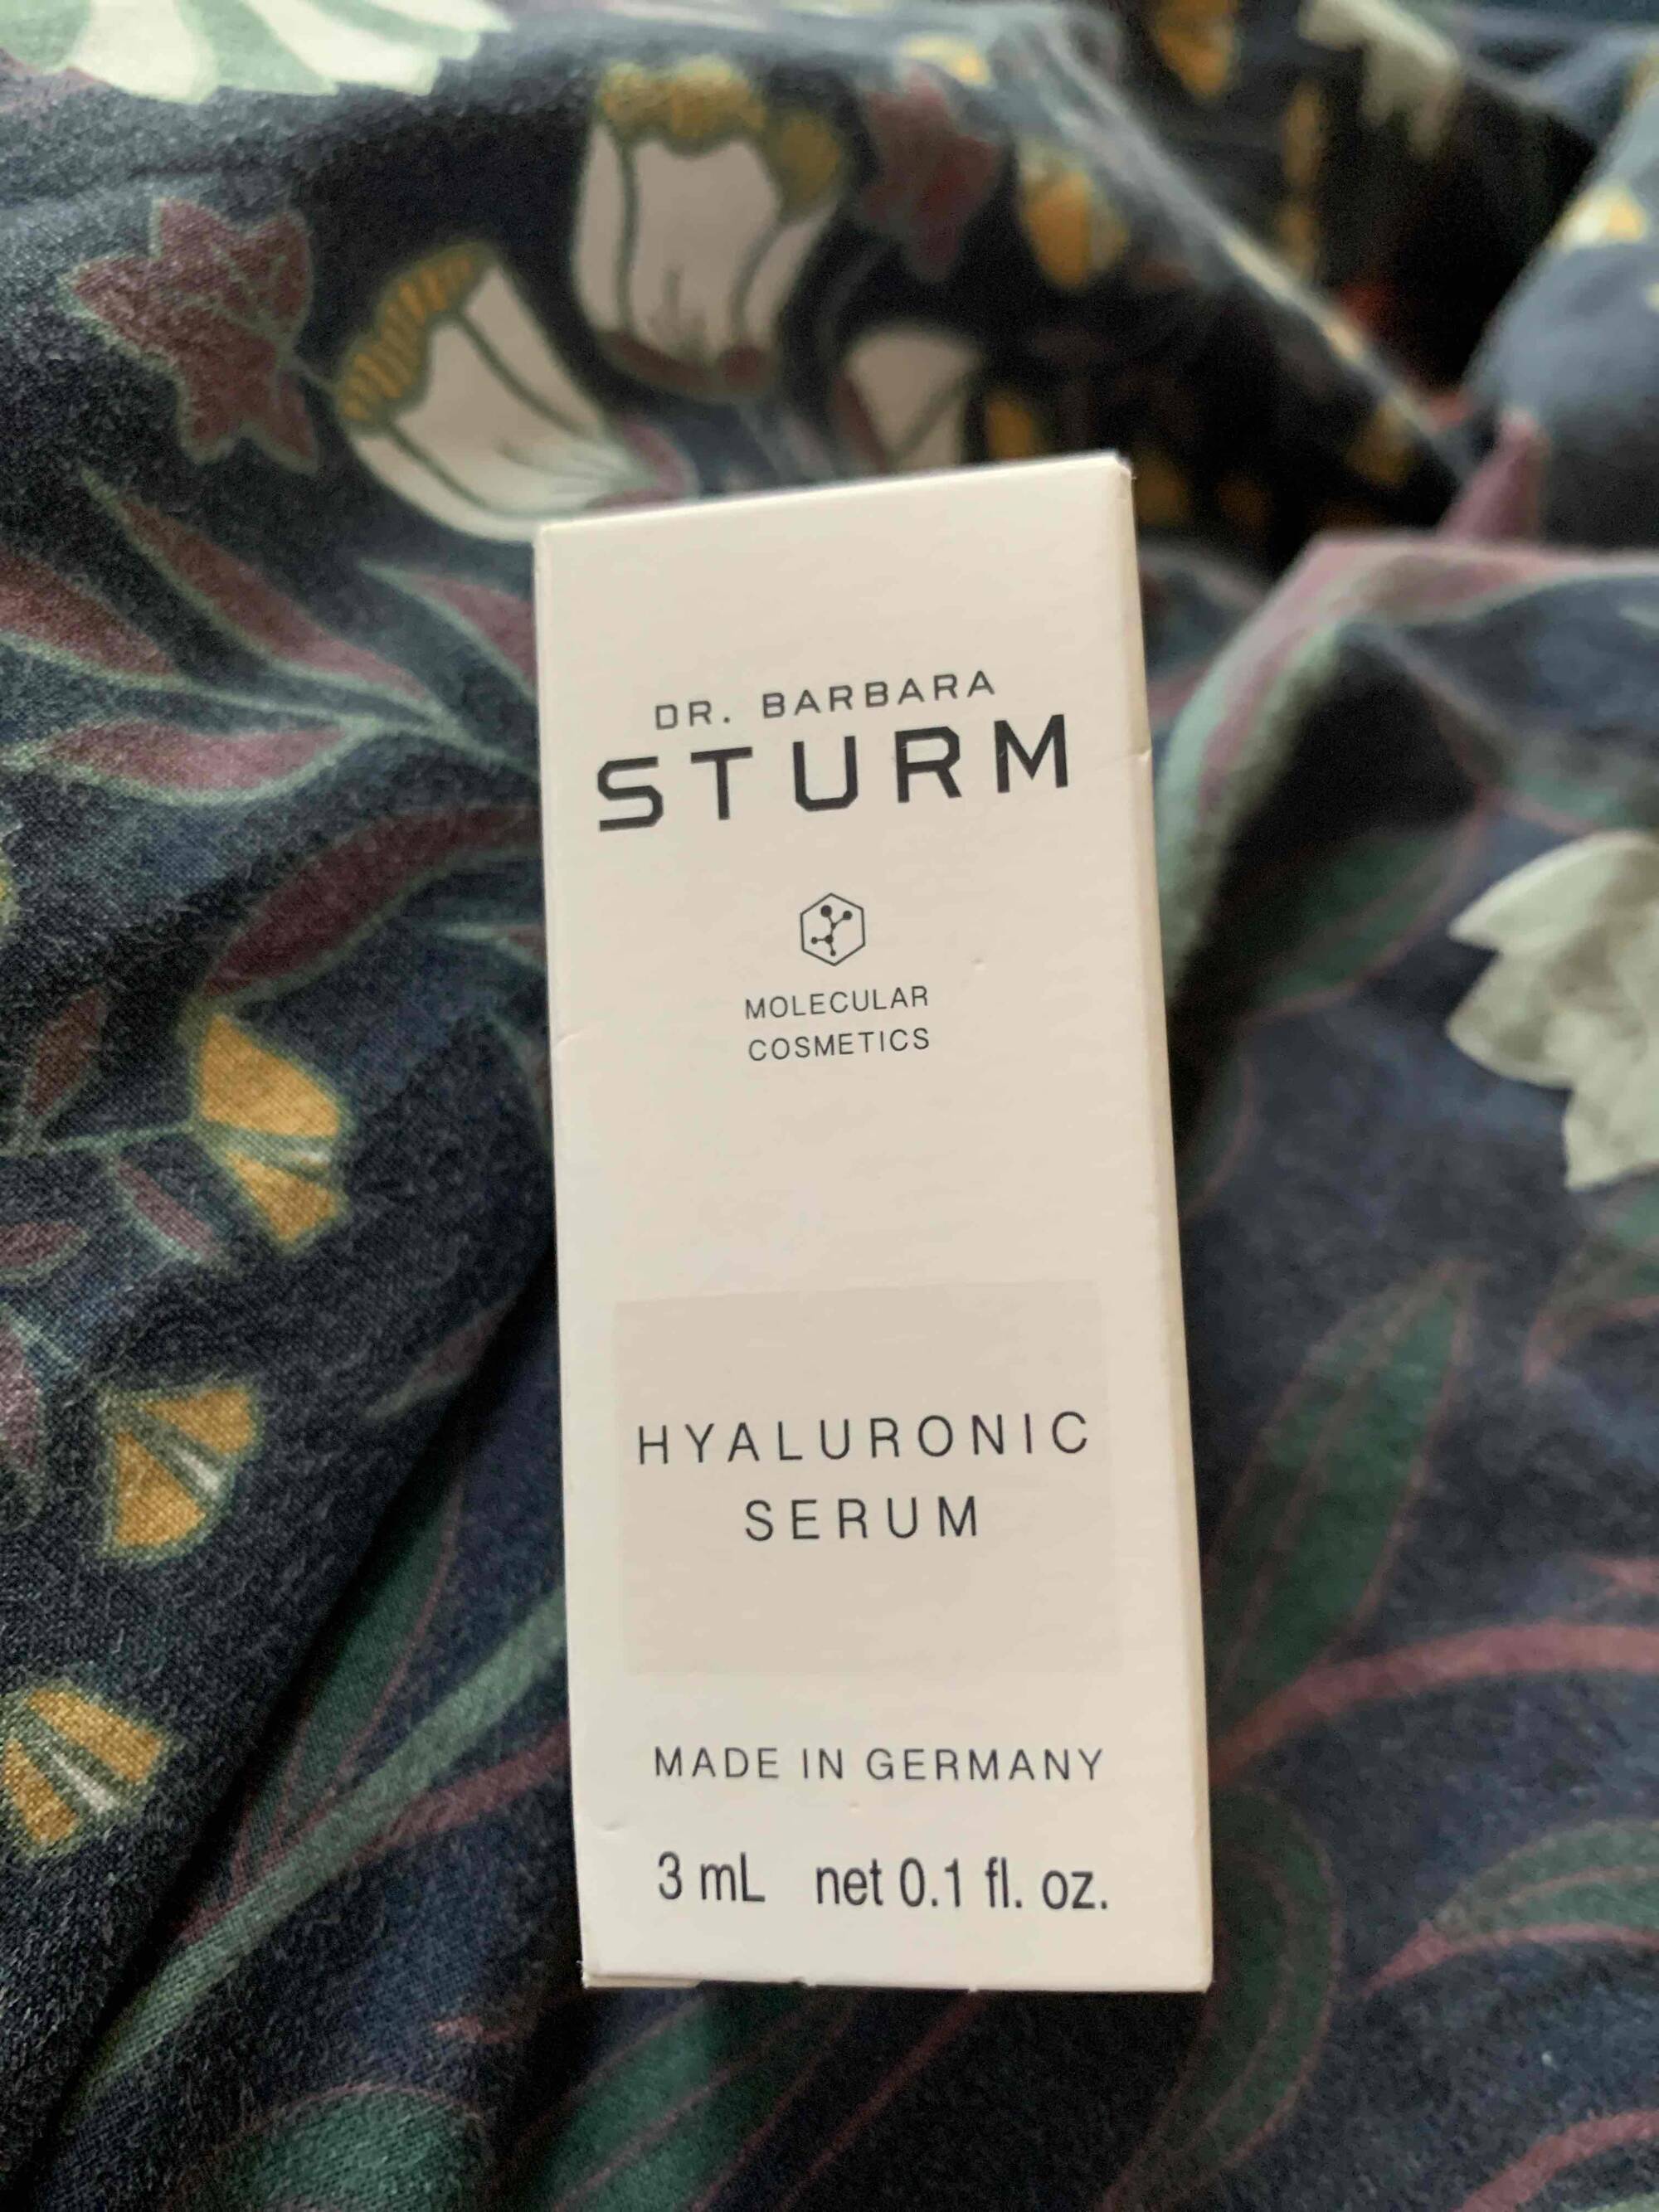 DR BARBARA STURM - Hyaluronic serum